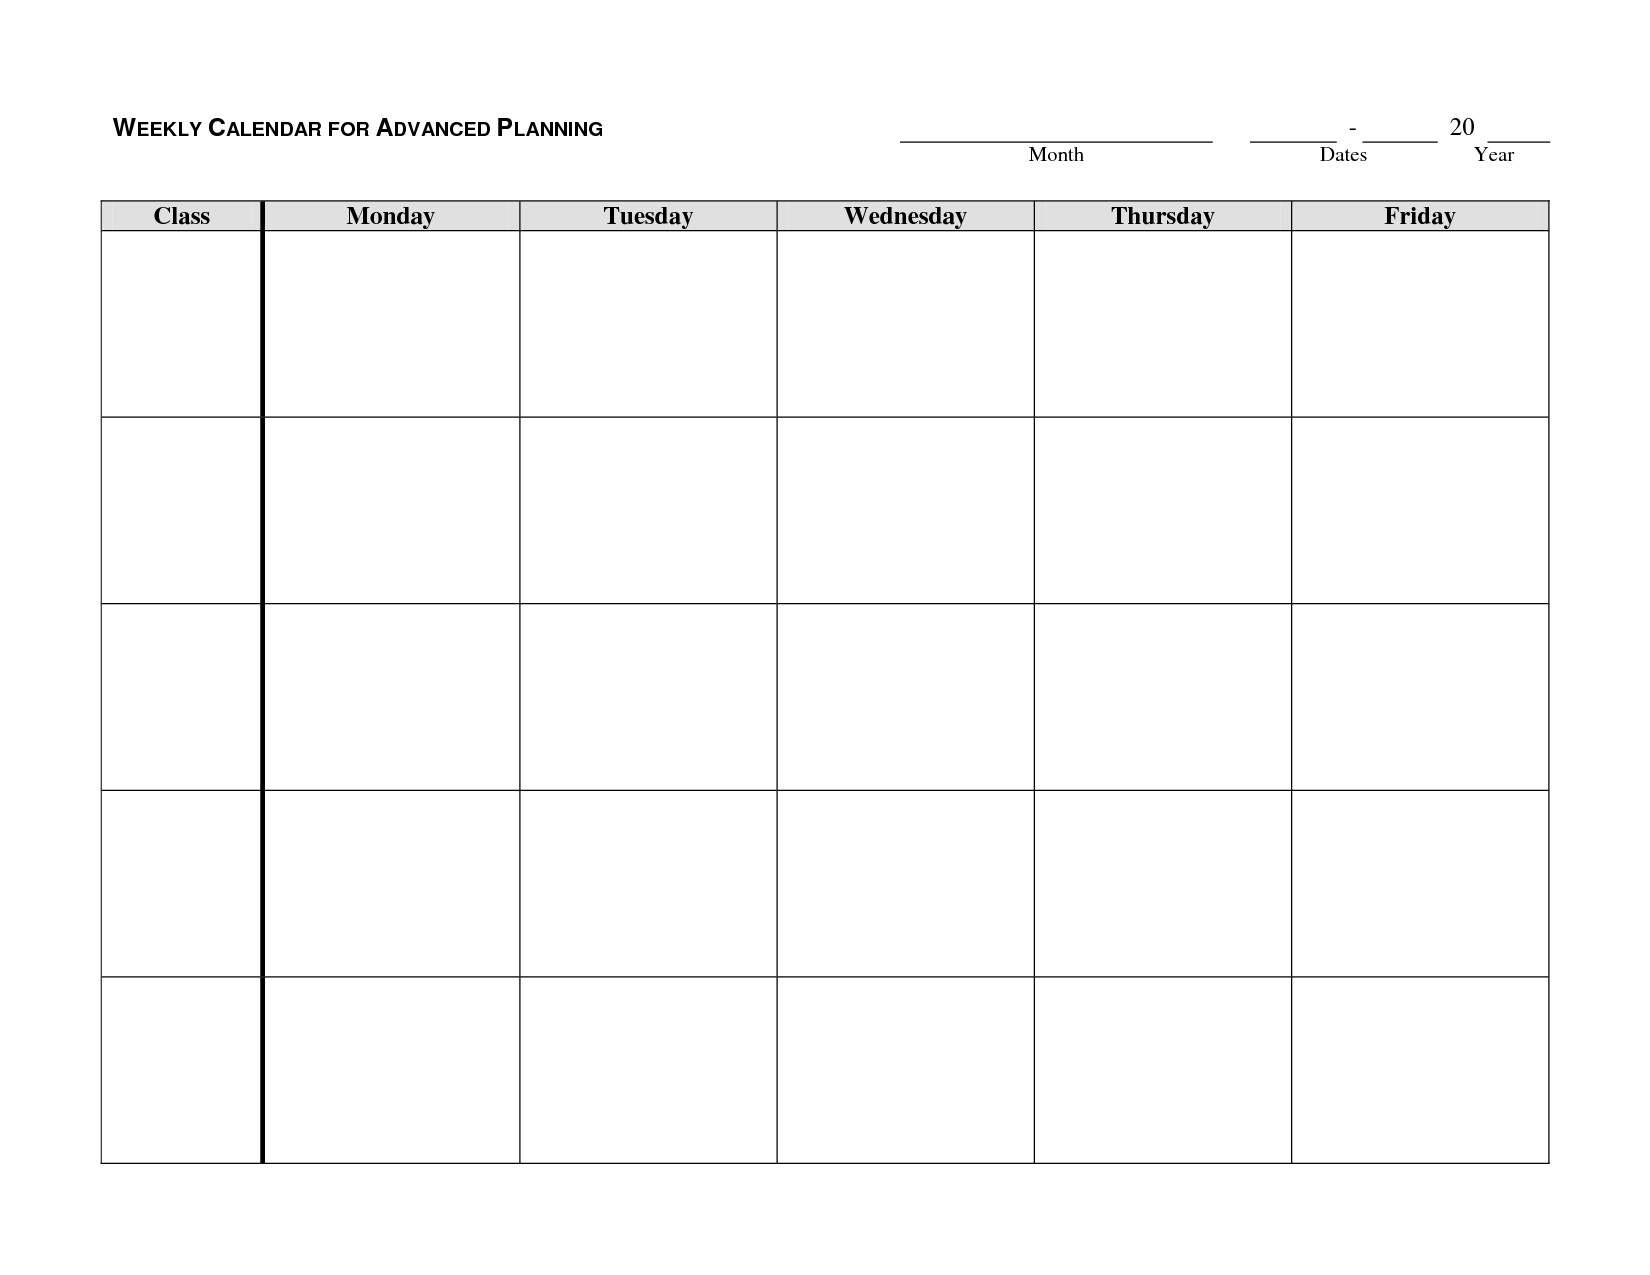 Blank Weekly Calendar Template Monday to Friday Blank Calendar